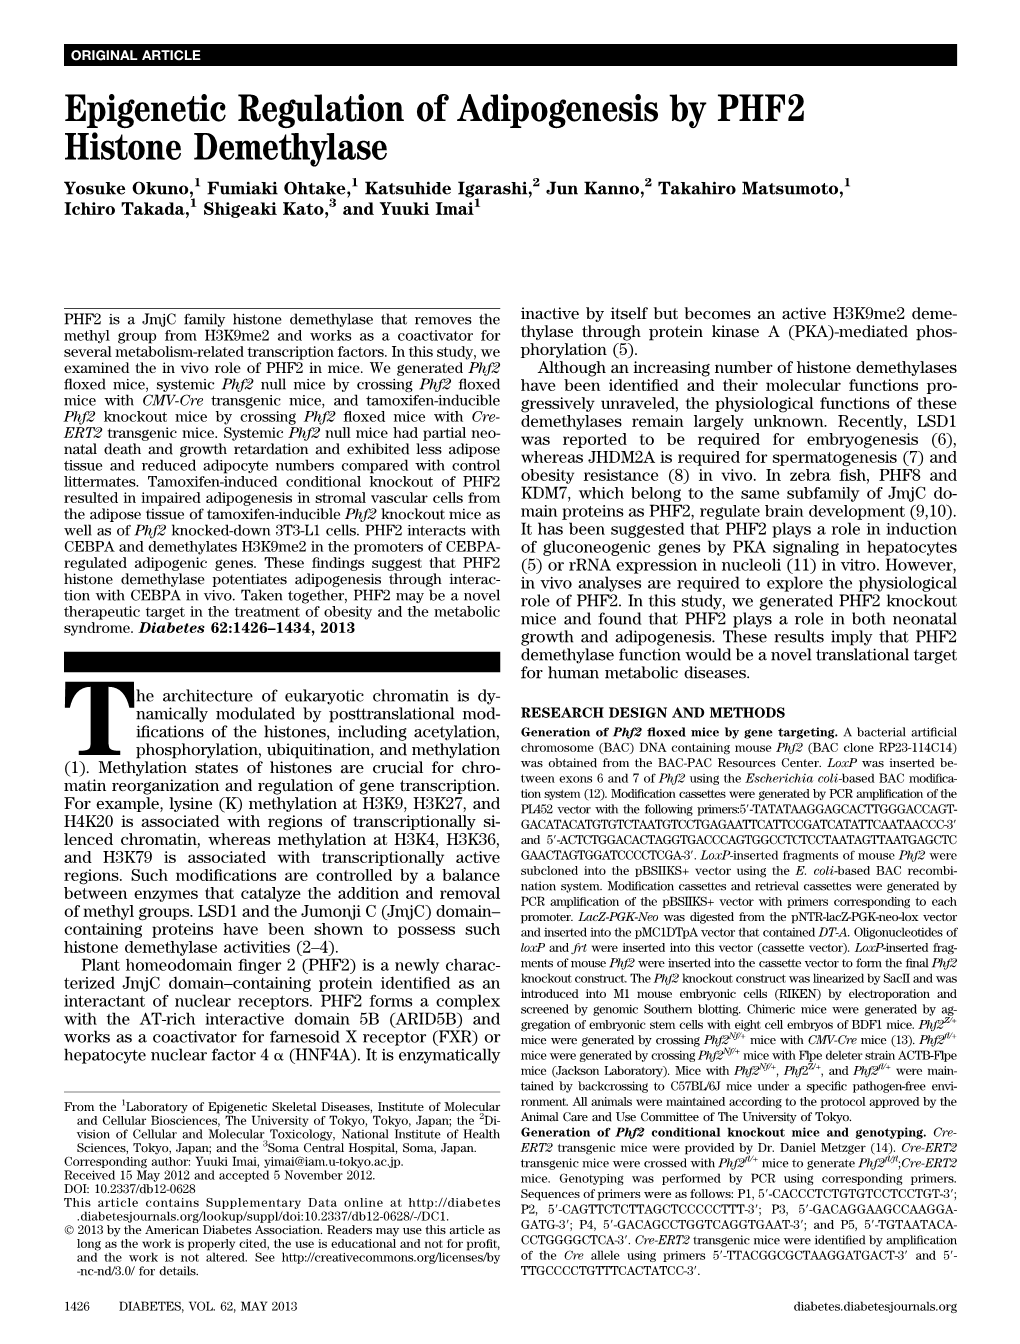 Epigenetic Regulation of Adipogenesis by PHF2 Histone